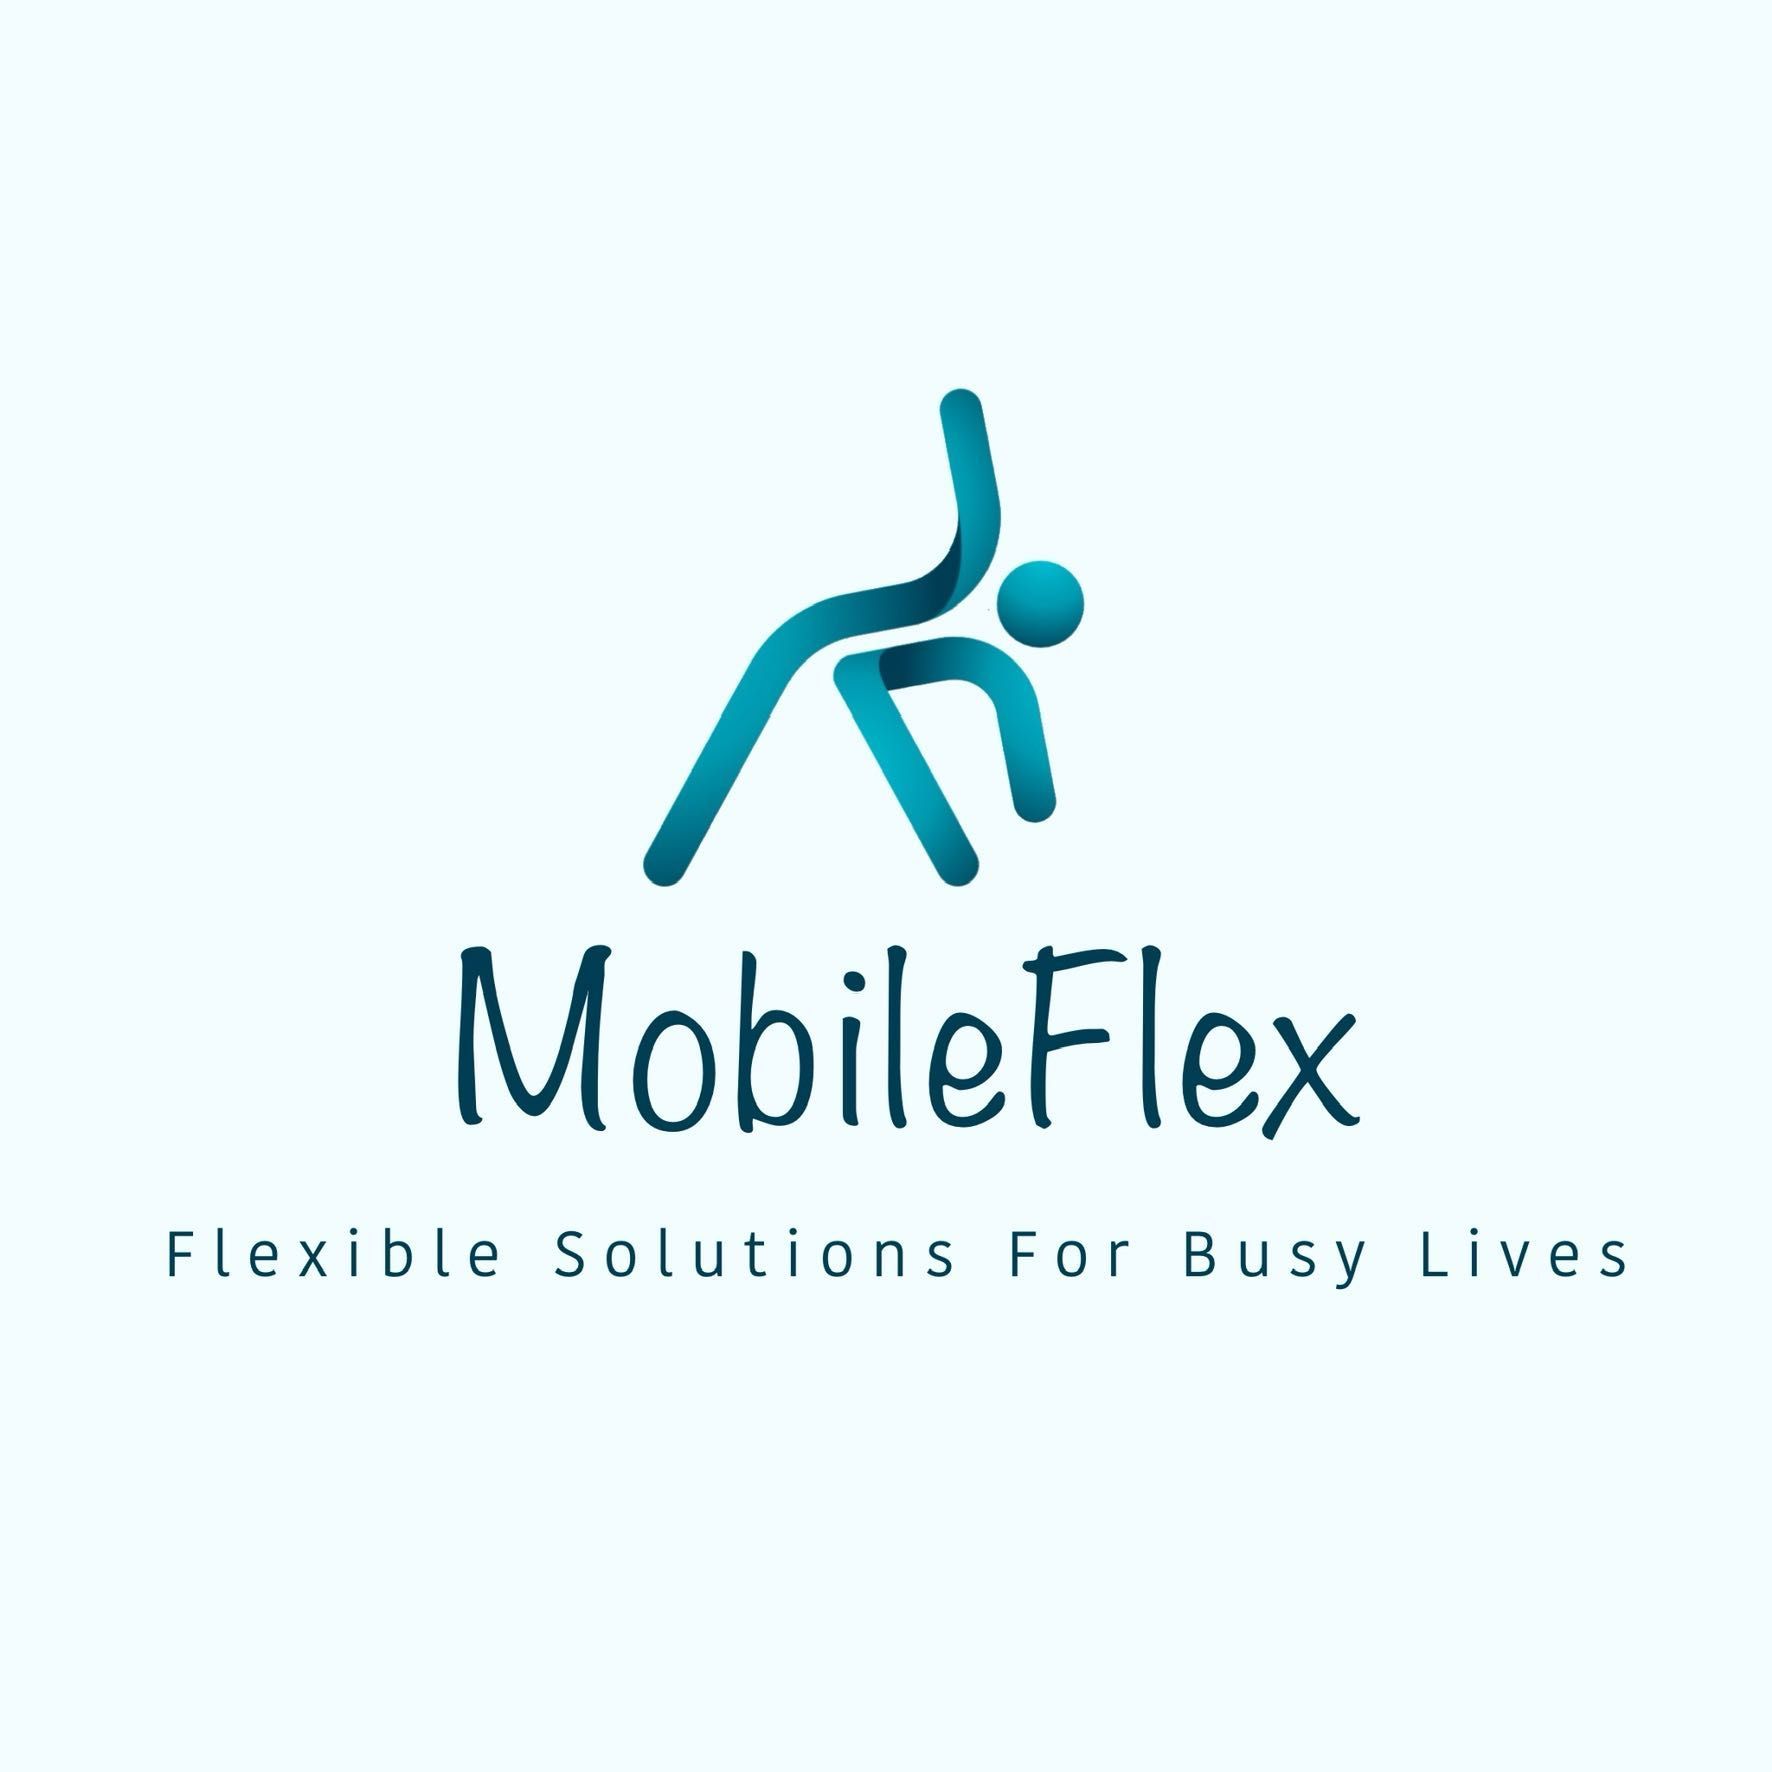 MobileFlex, Streamwood, 60107